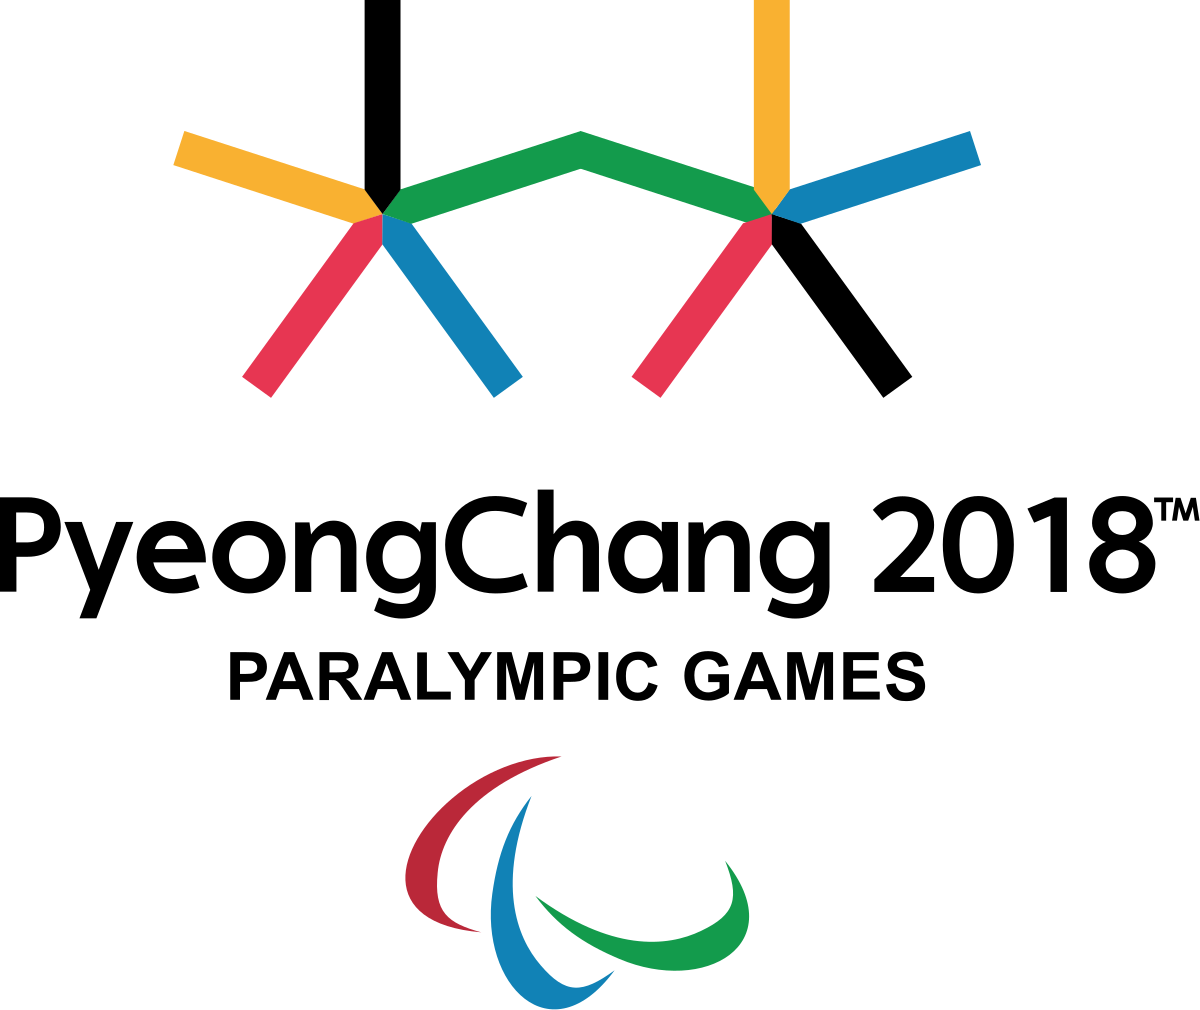 Paralympic games Pyeongchang 2018